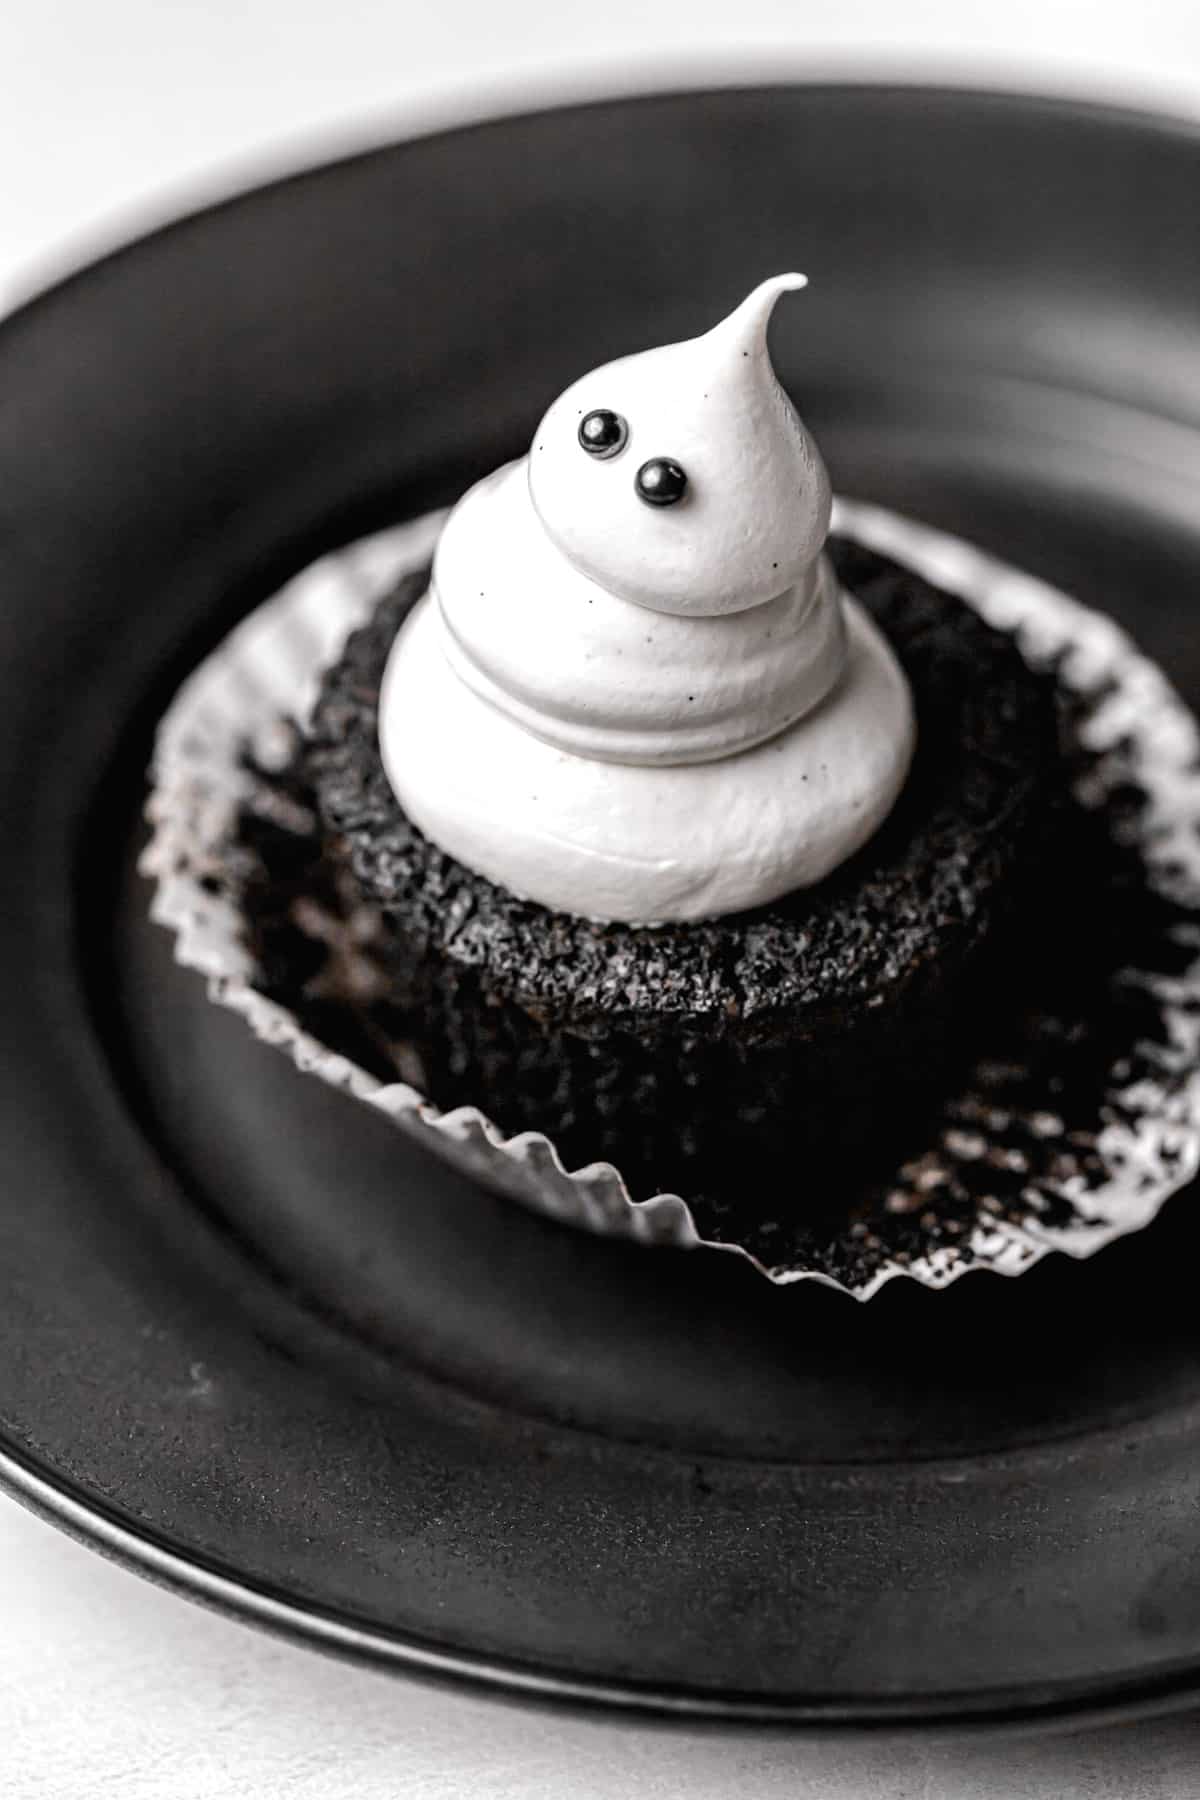 one chocolate caramel cupcake on black plate.